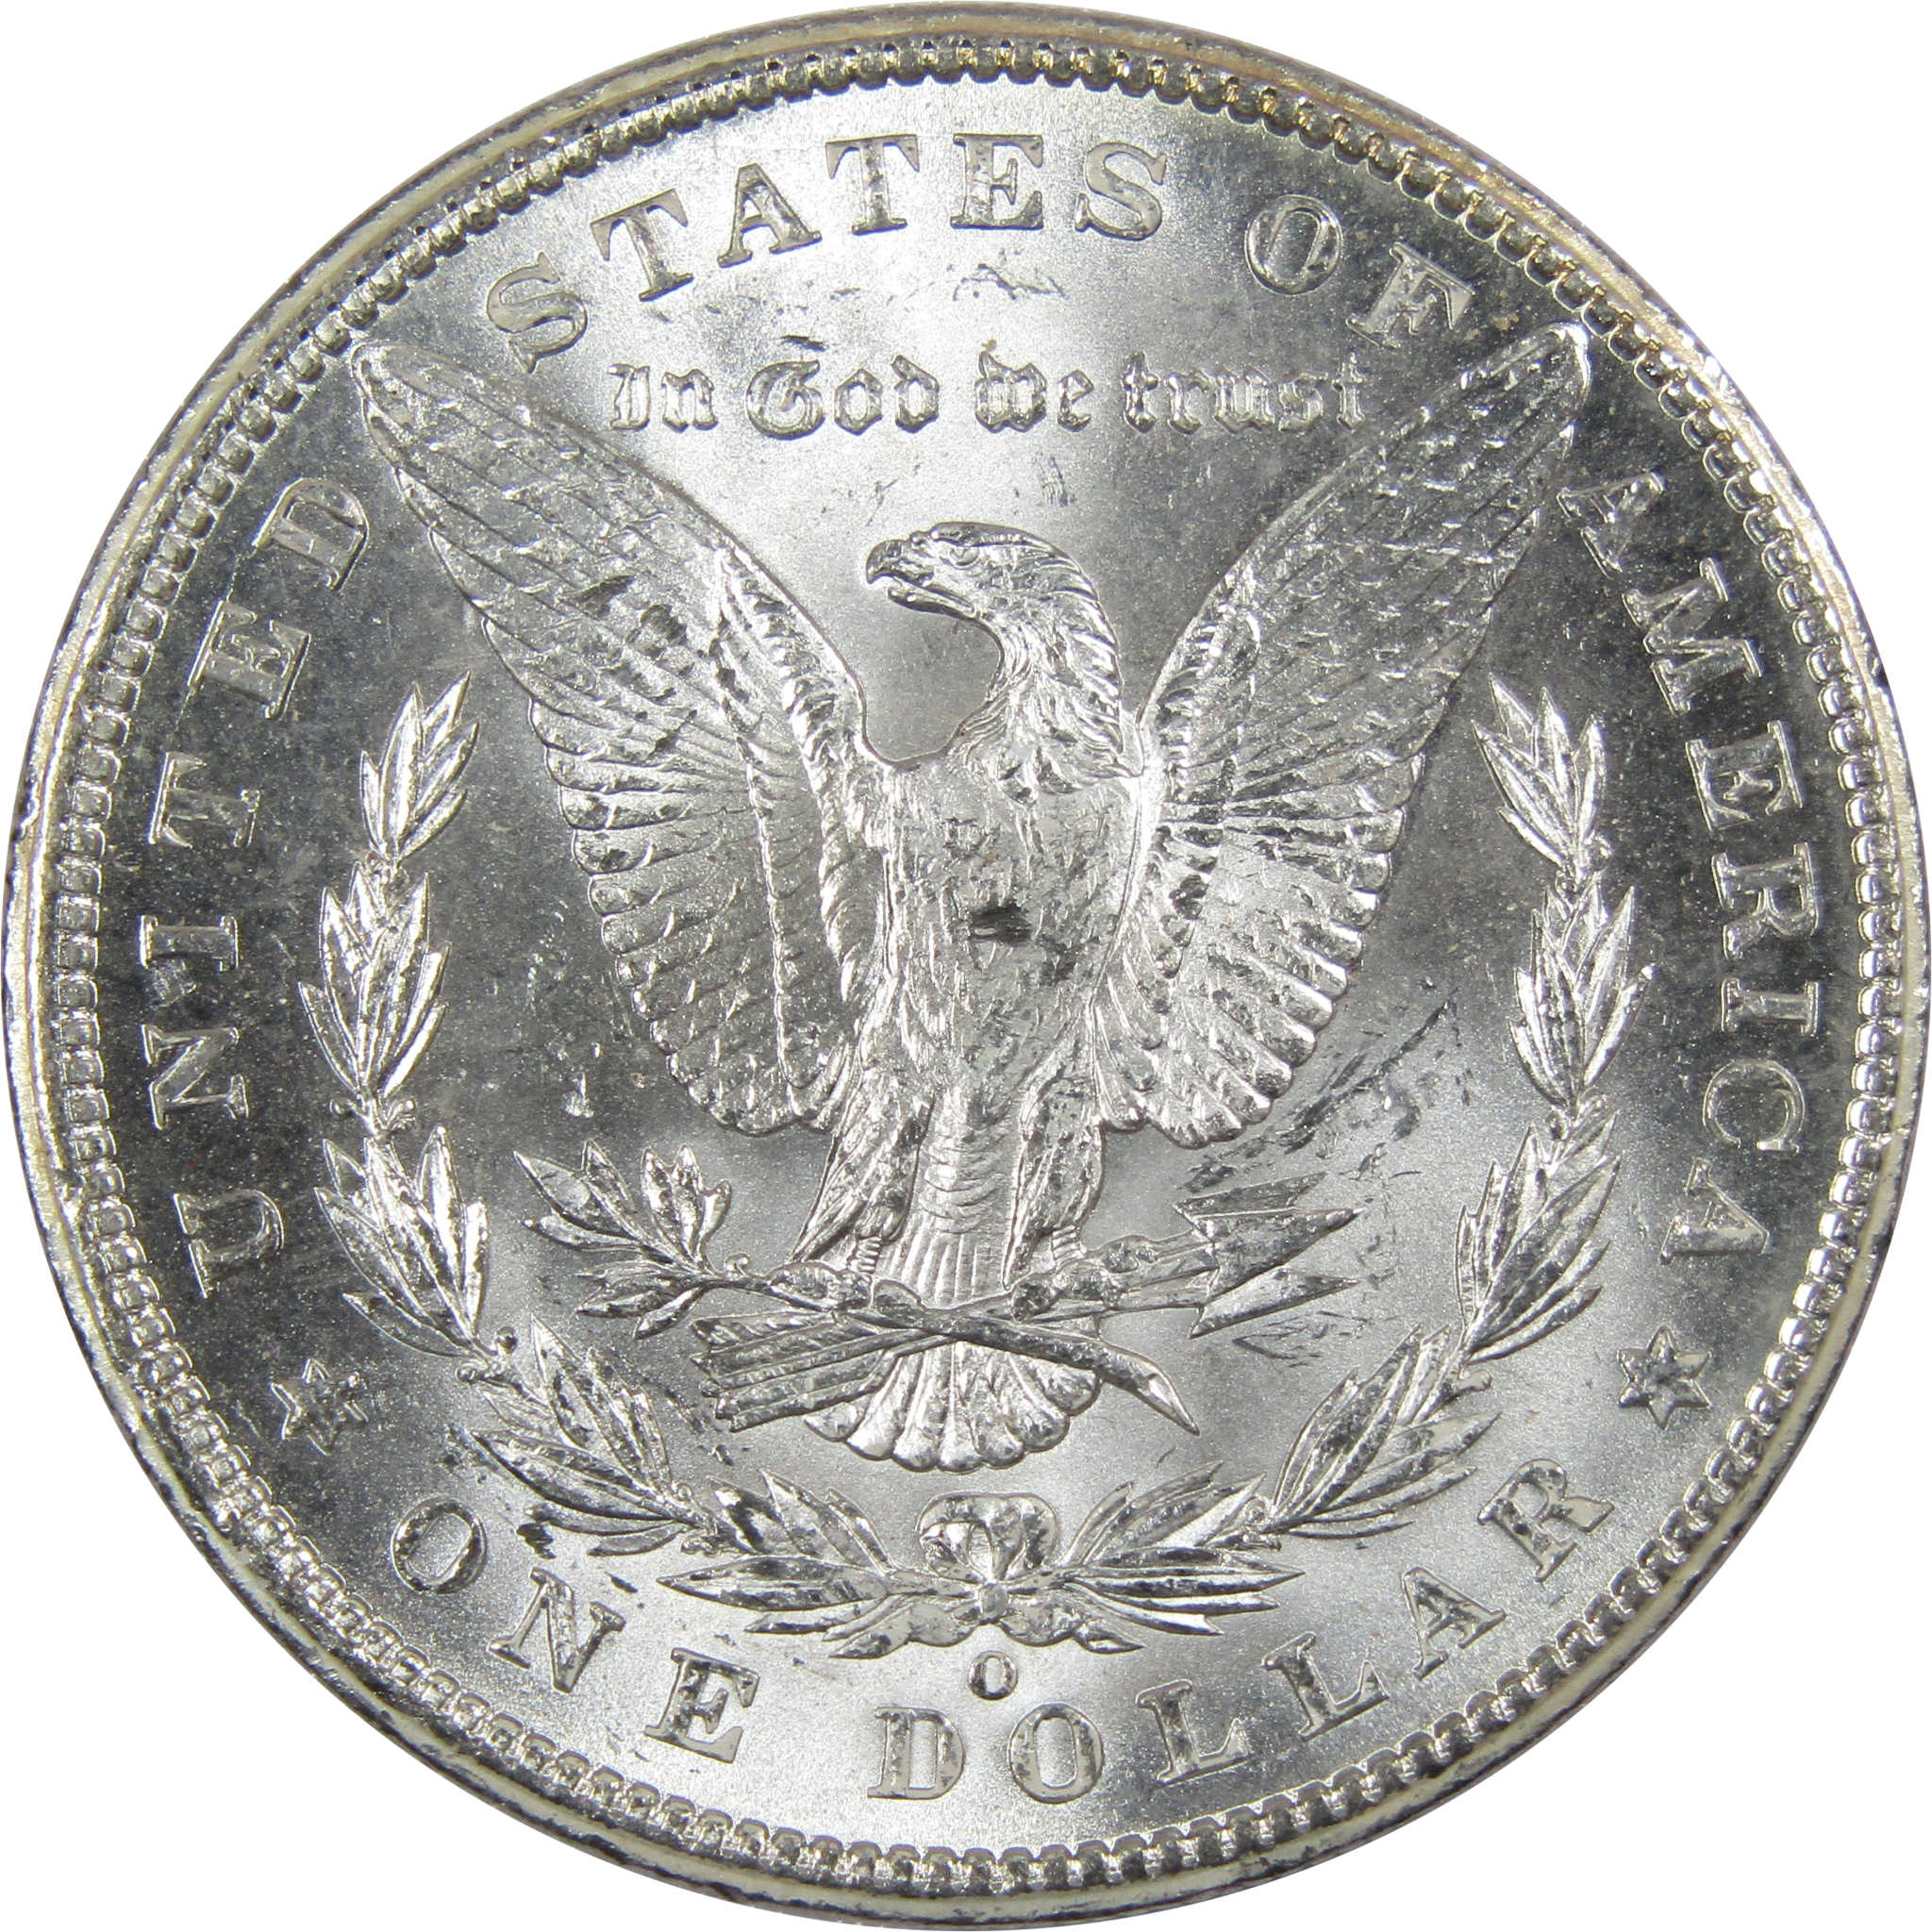 1900 O Morgan Dollar BU Uncirculated Mint State 90% Silver SKU:IPC9728 - Morgan coin - Morgan silver dollar - Morgan silver dollar for sale - Profile Coins &amp; Collectibles